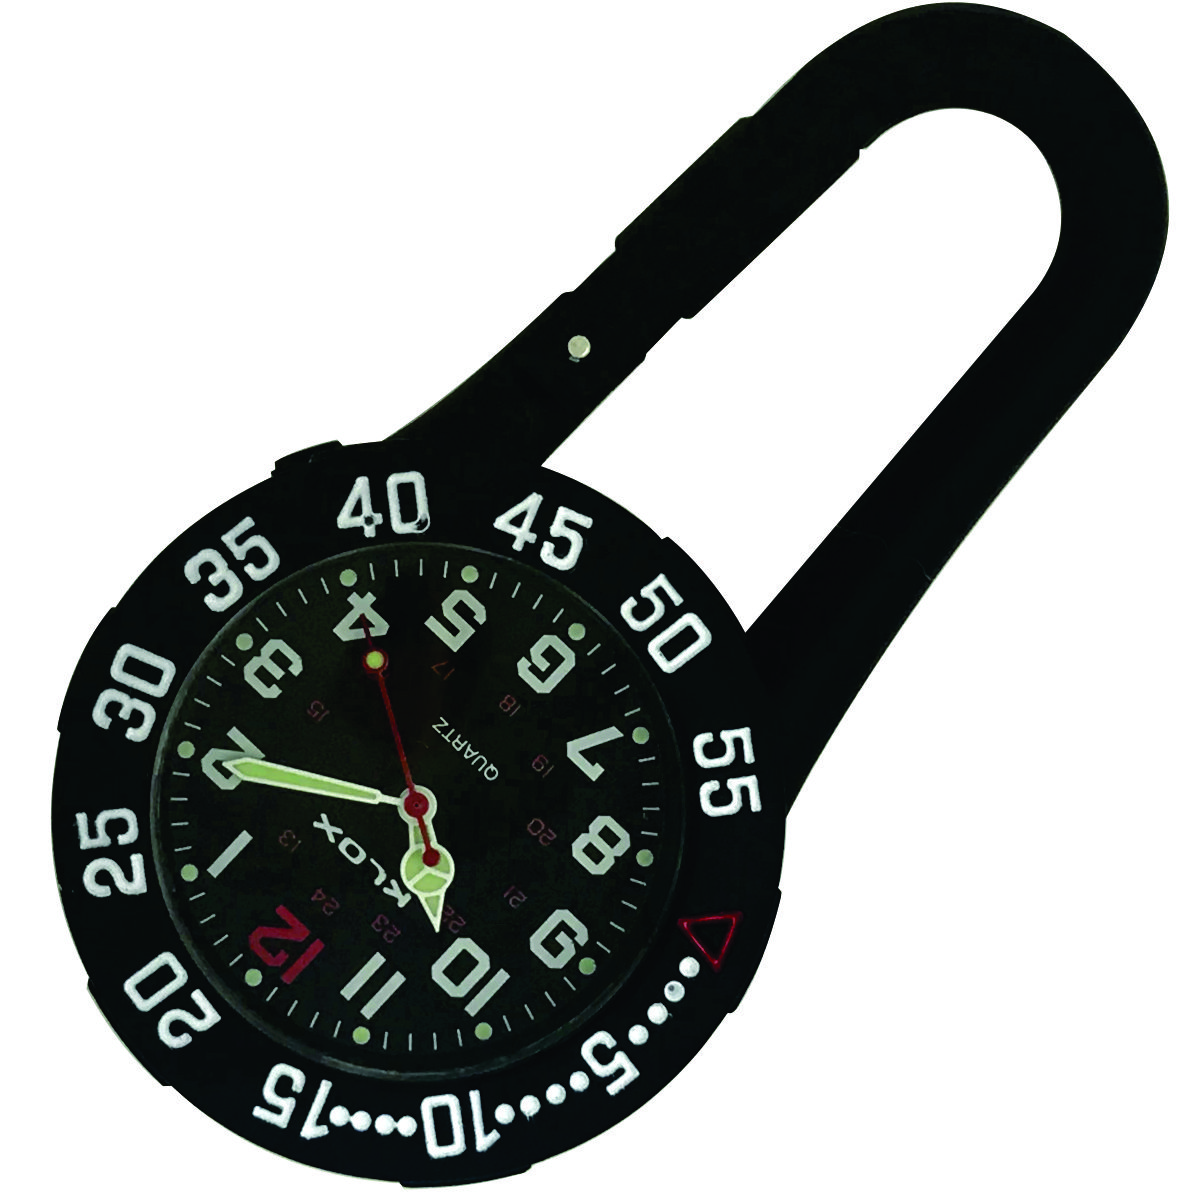 Metal Carabiner Clip Watch - Rotating Bezel - BLACK - BLACK Dial